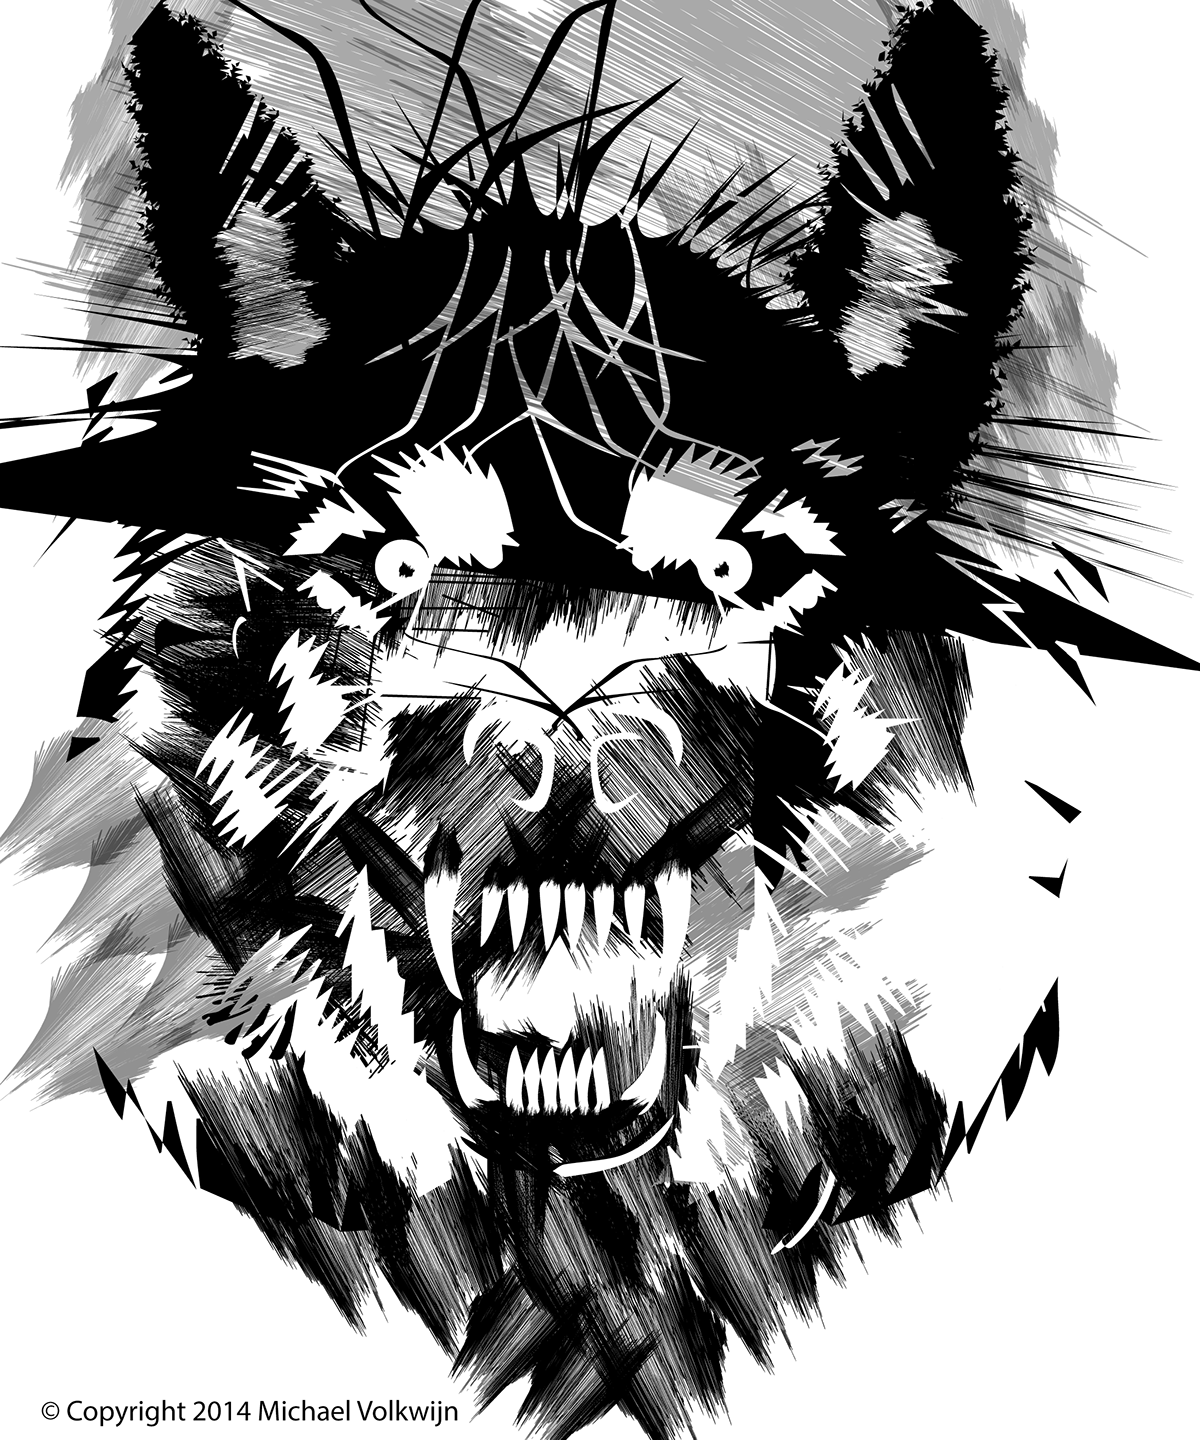 animals abstract dark blackandwhite weird gothic fantasy horror vector portrait art graphic surreal deer Panda 